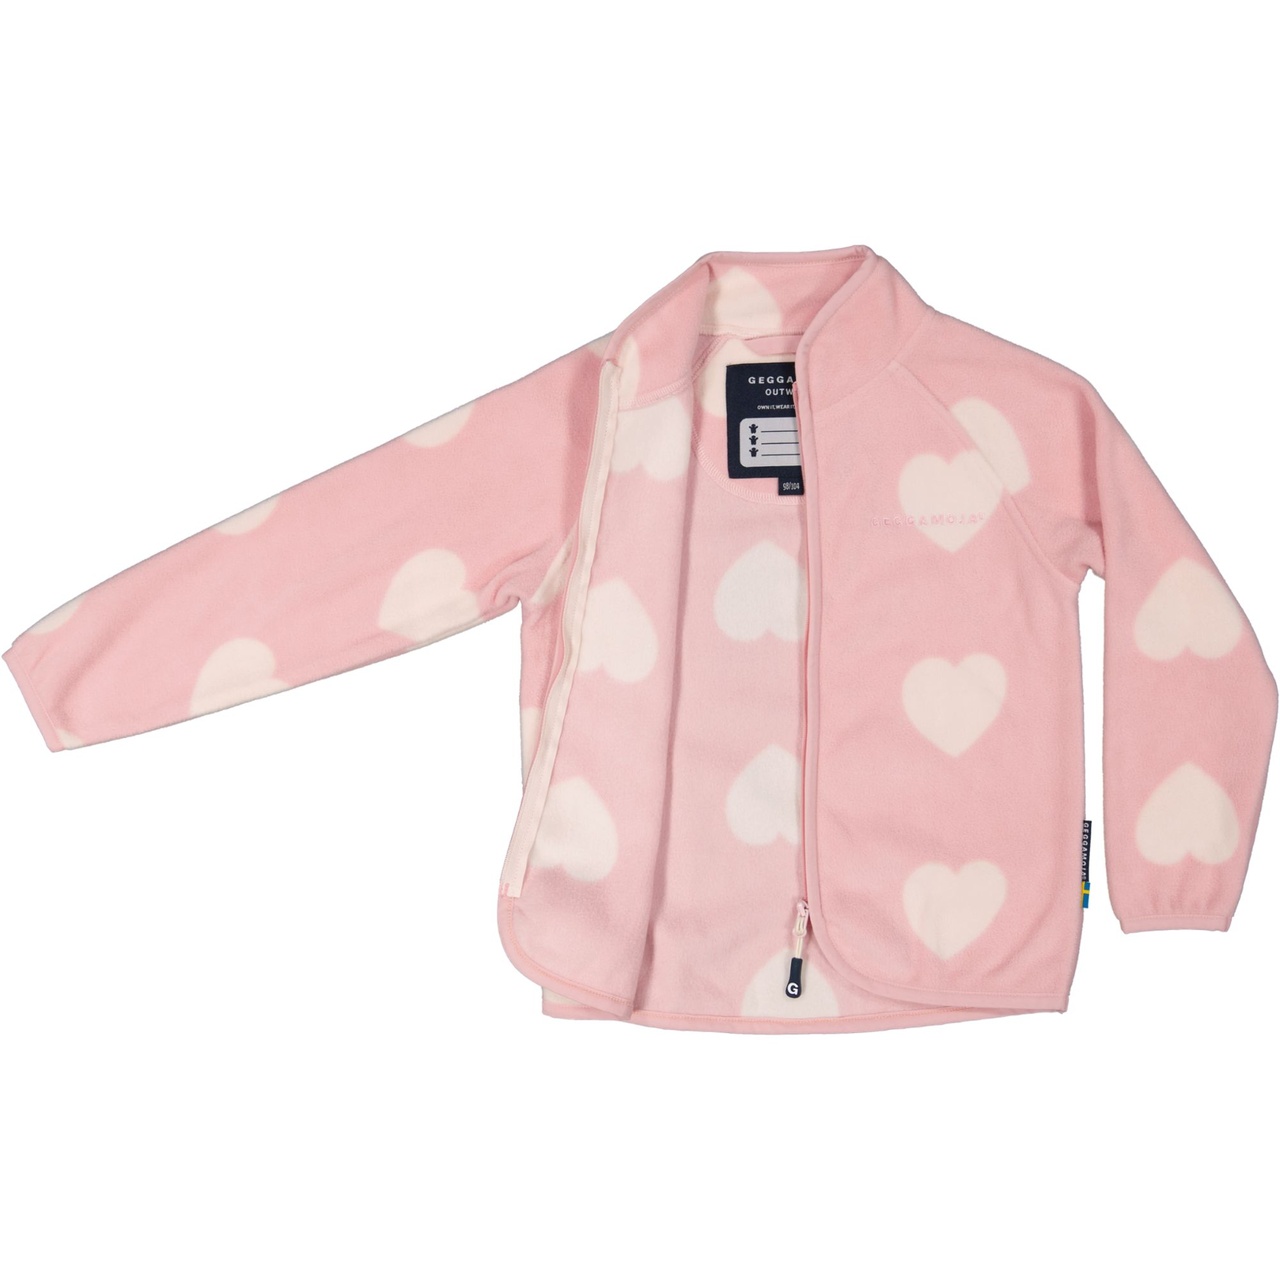 Single fleece set Pink Heart 74/80